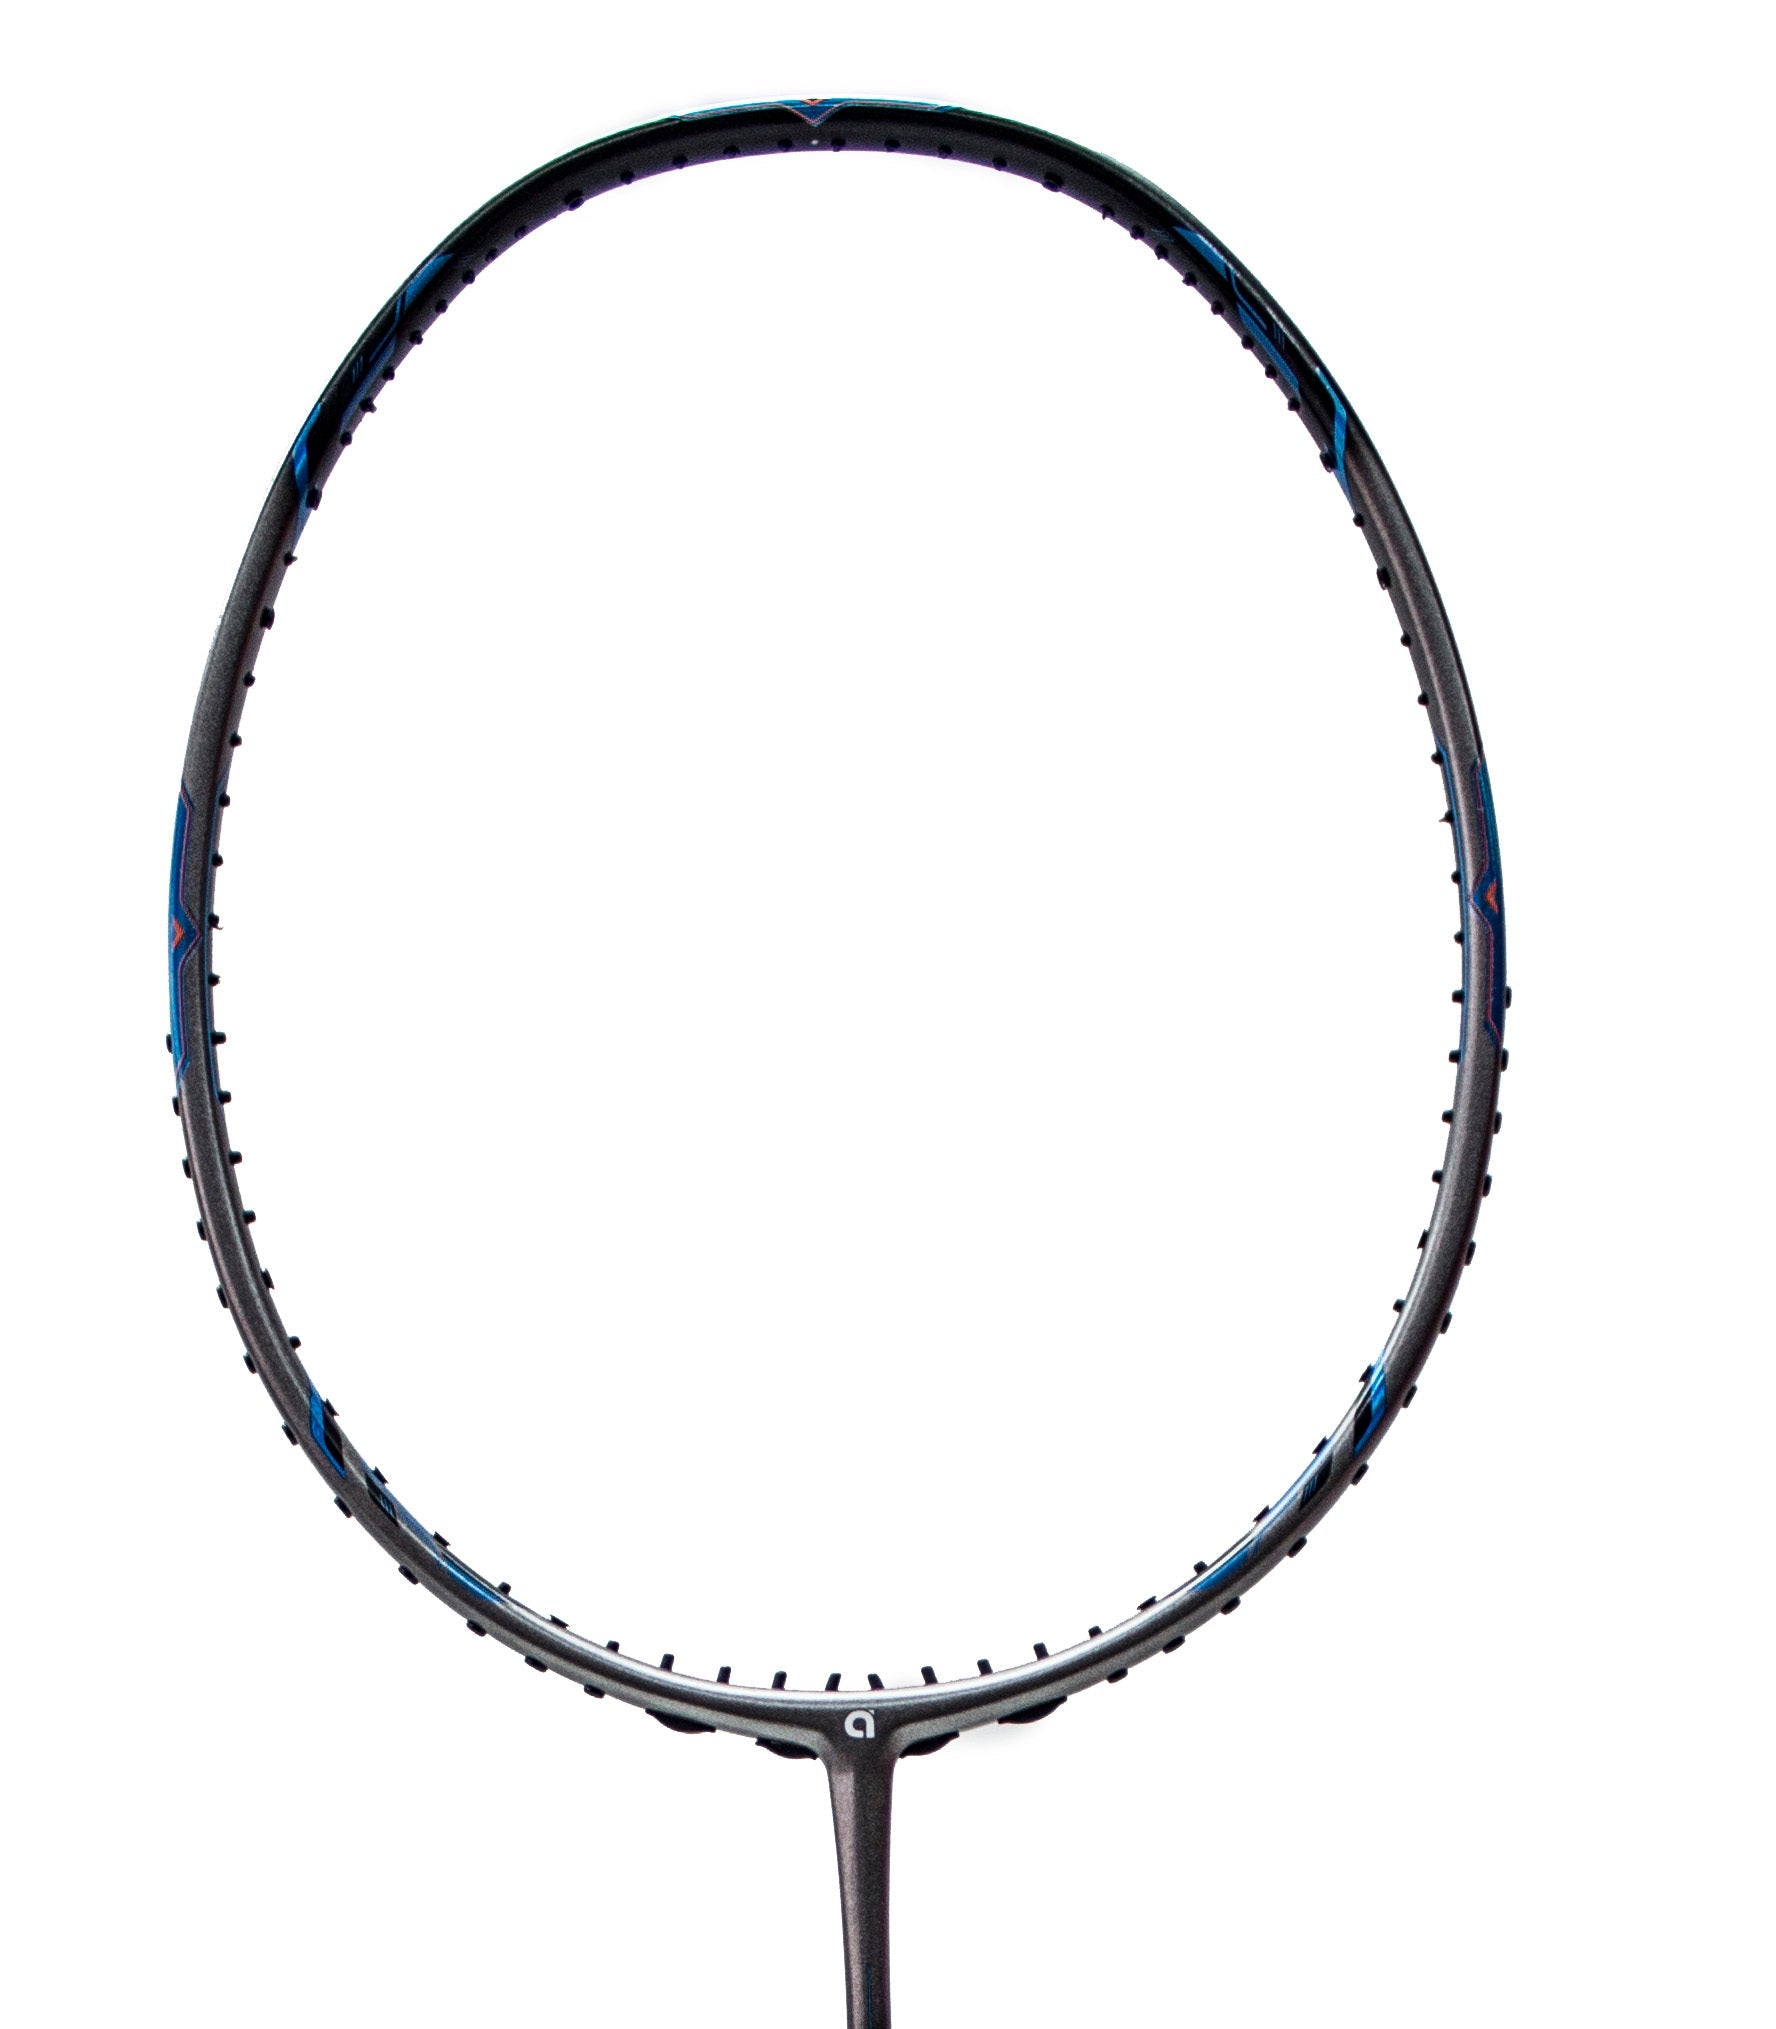 Apacs Z-Series II Strung Badminton Racquet